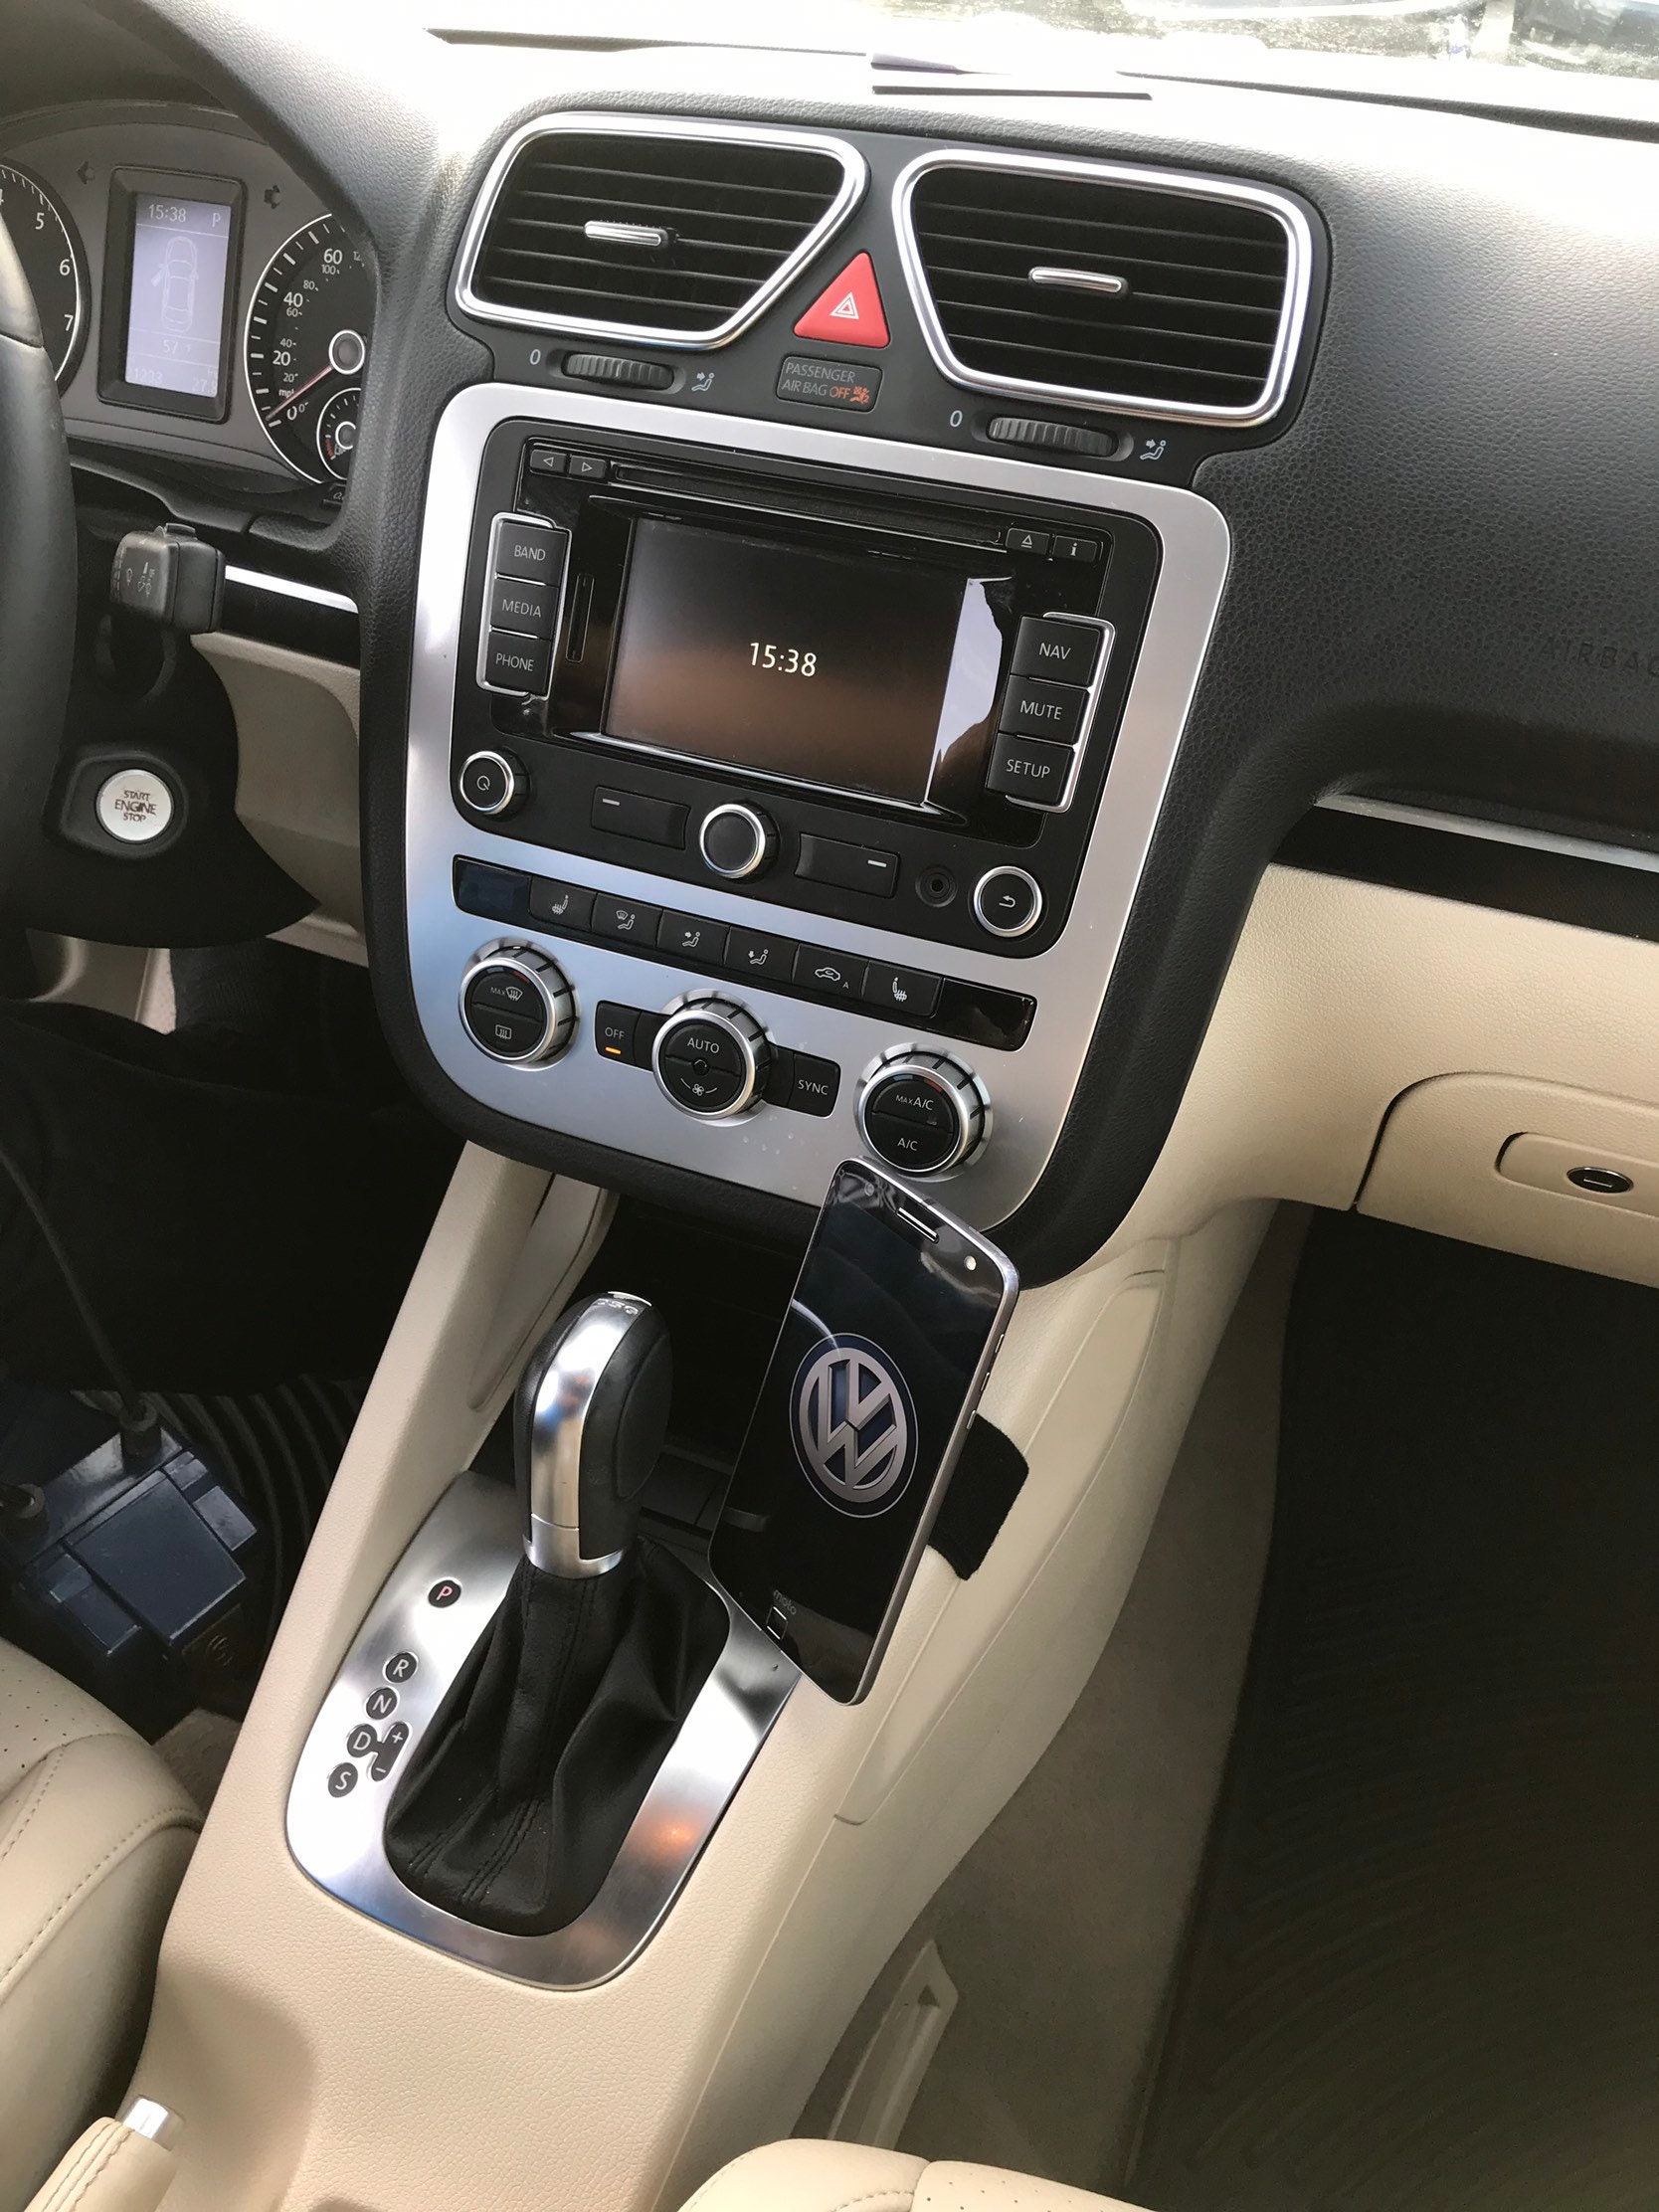 VW Volkswagen Eos Cell Phone Mount holder / Bracket 